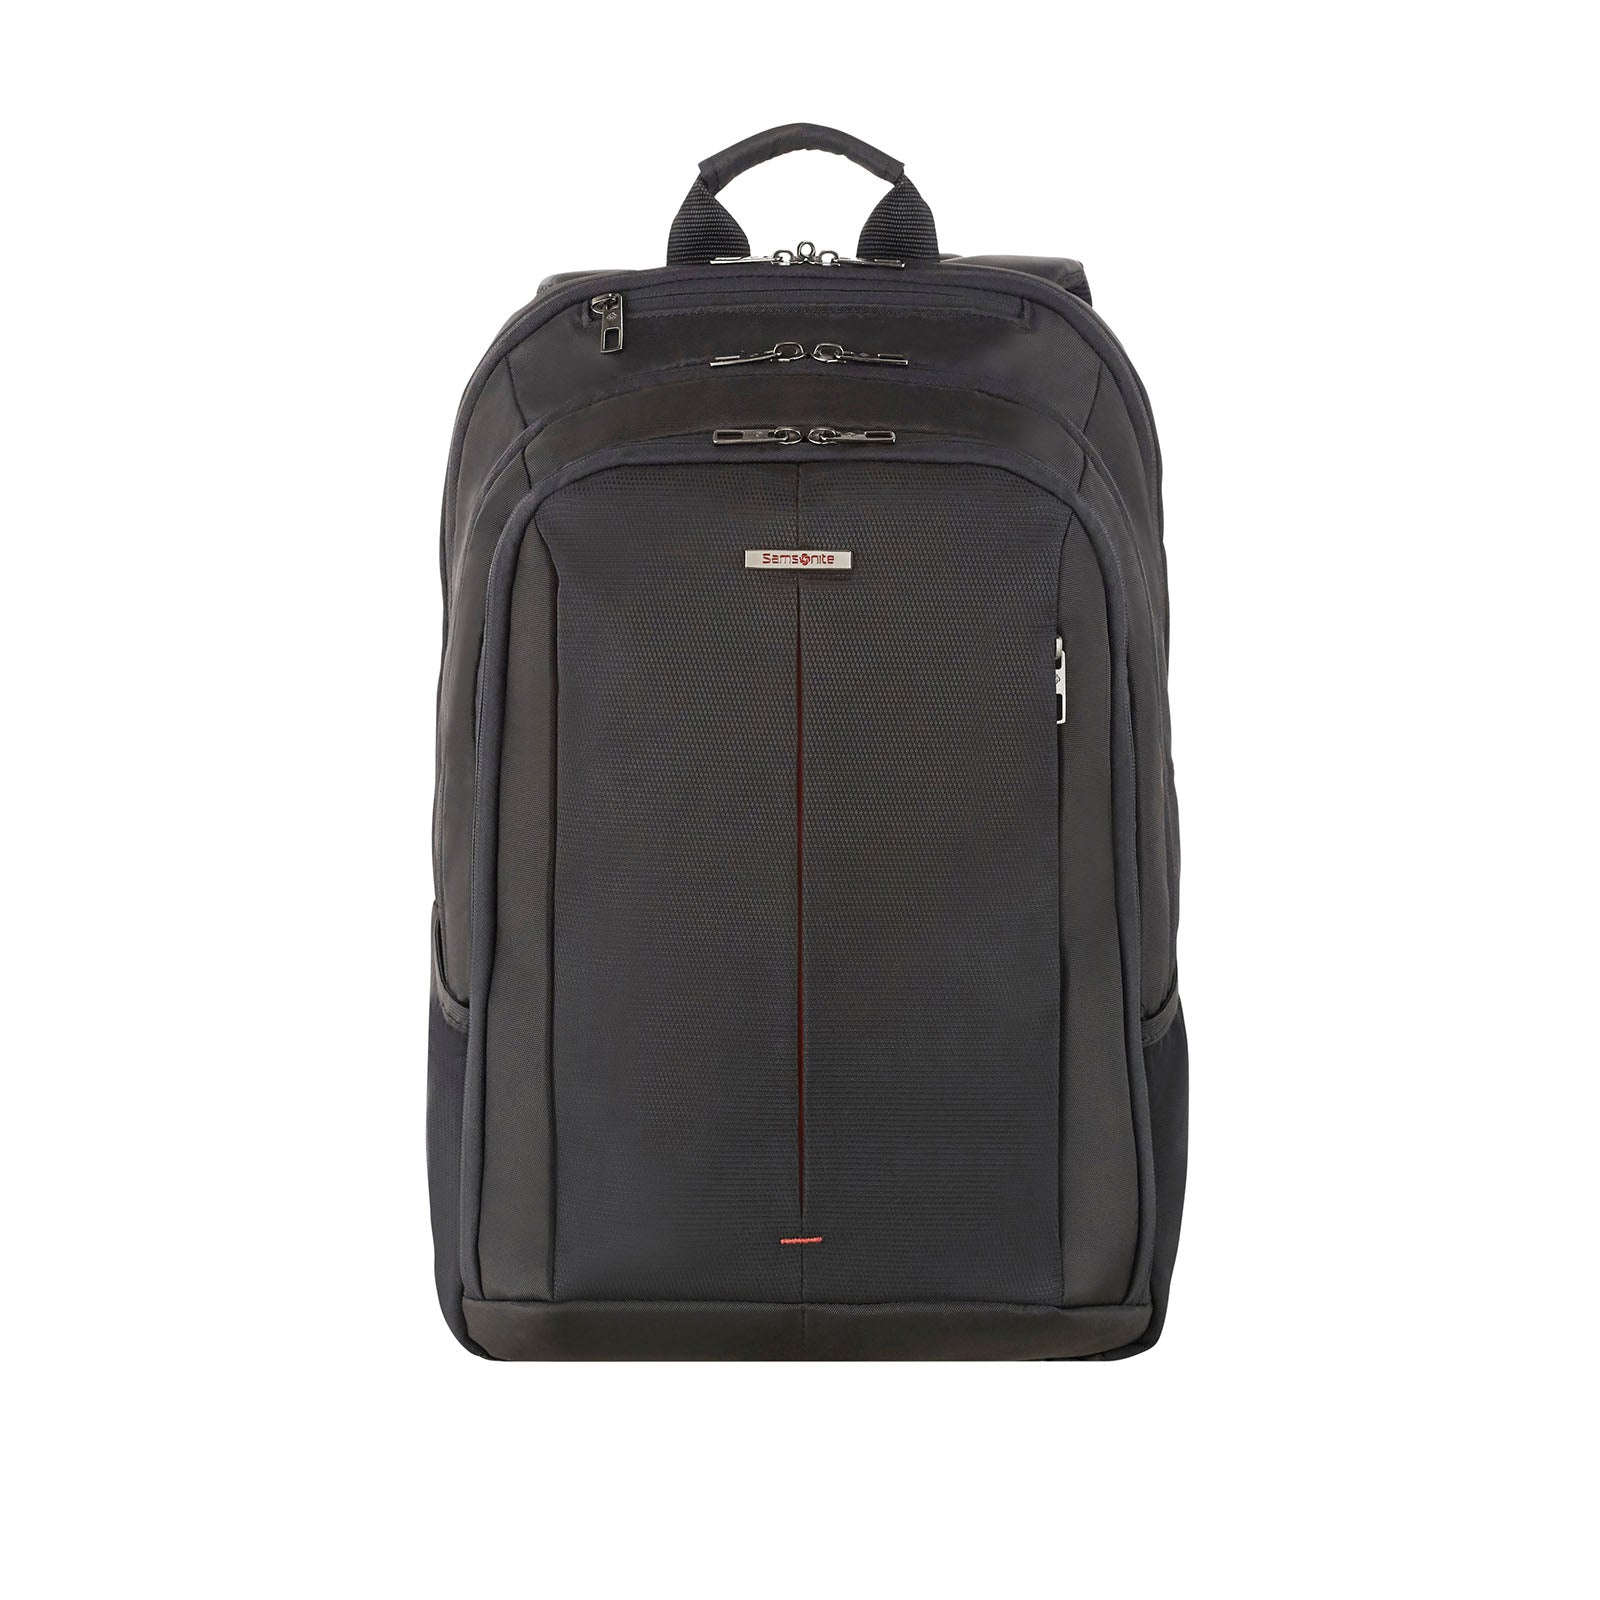 Samsonite-Guardit-2-17-Inch-Laptop-Backpack-Front